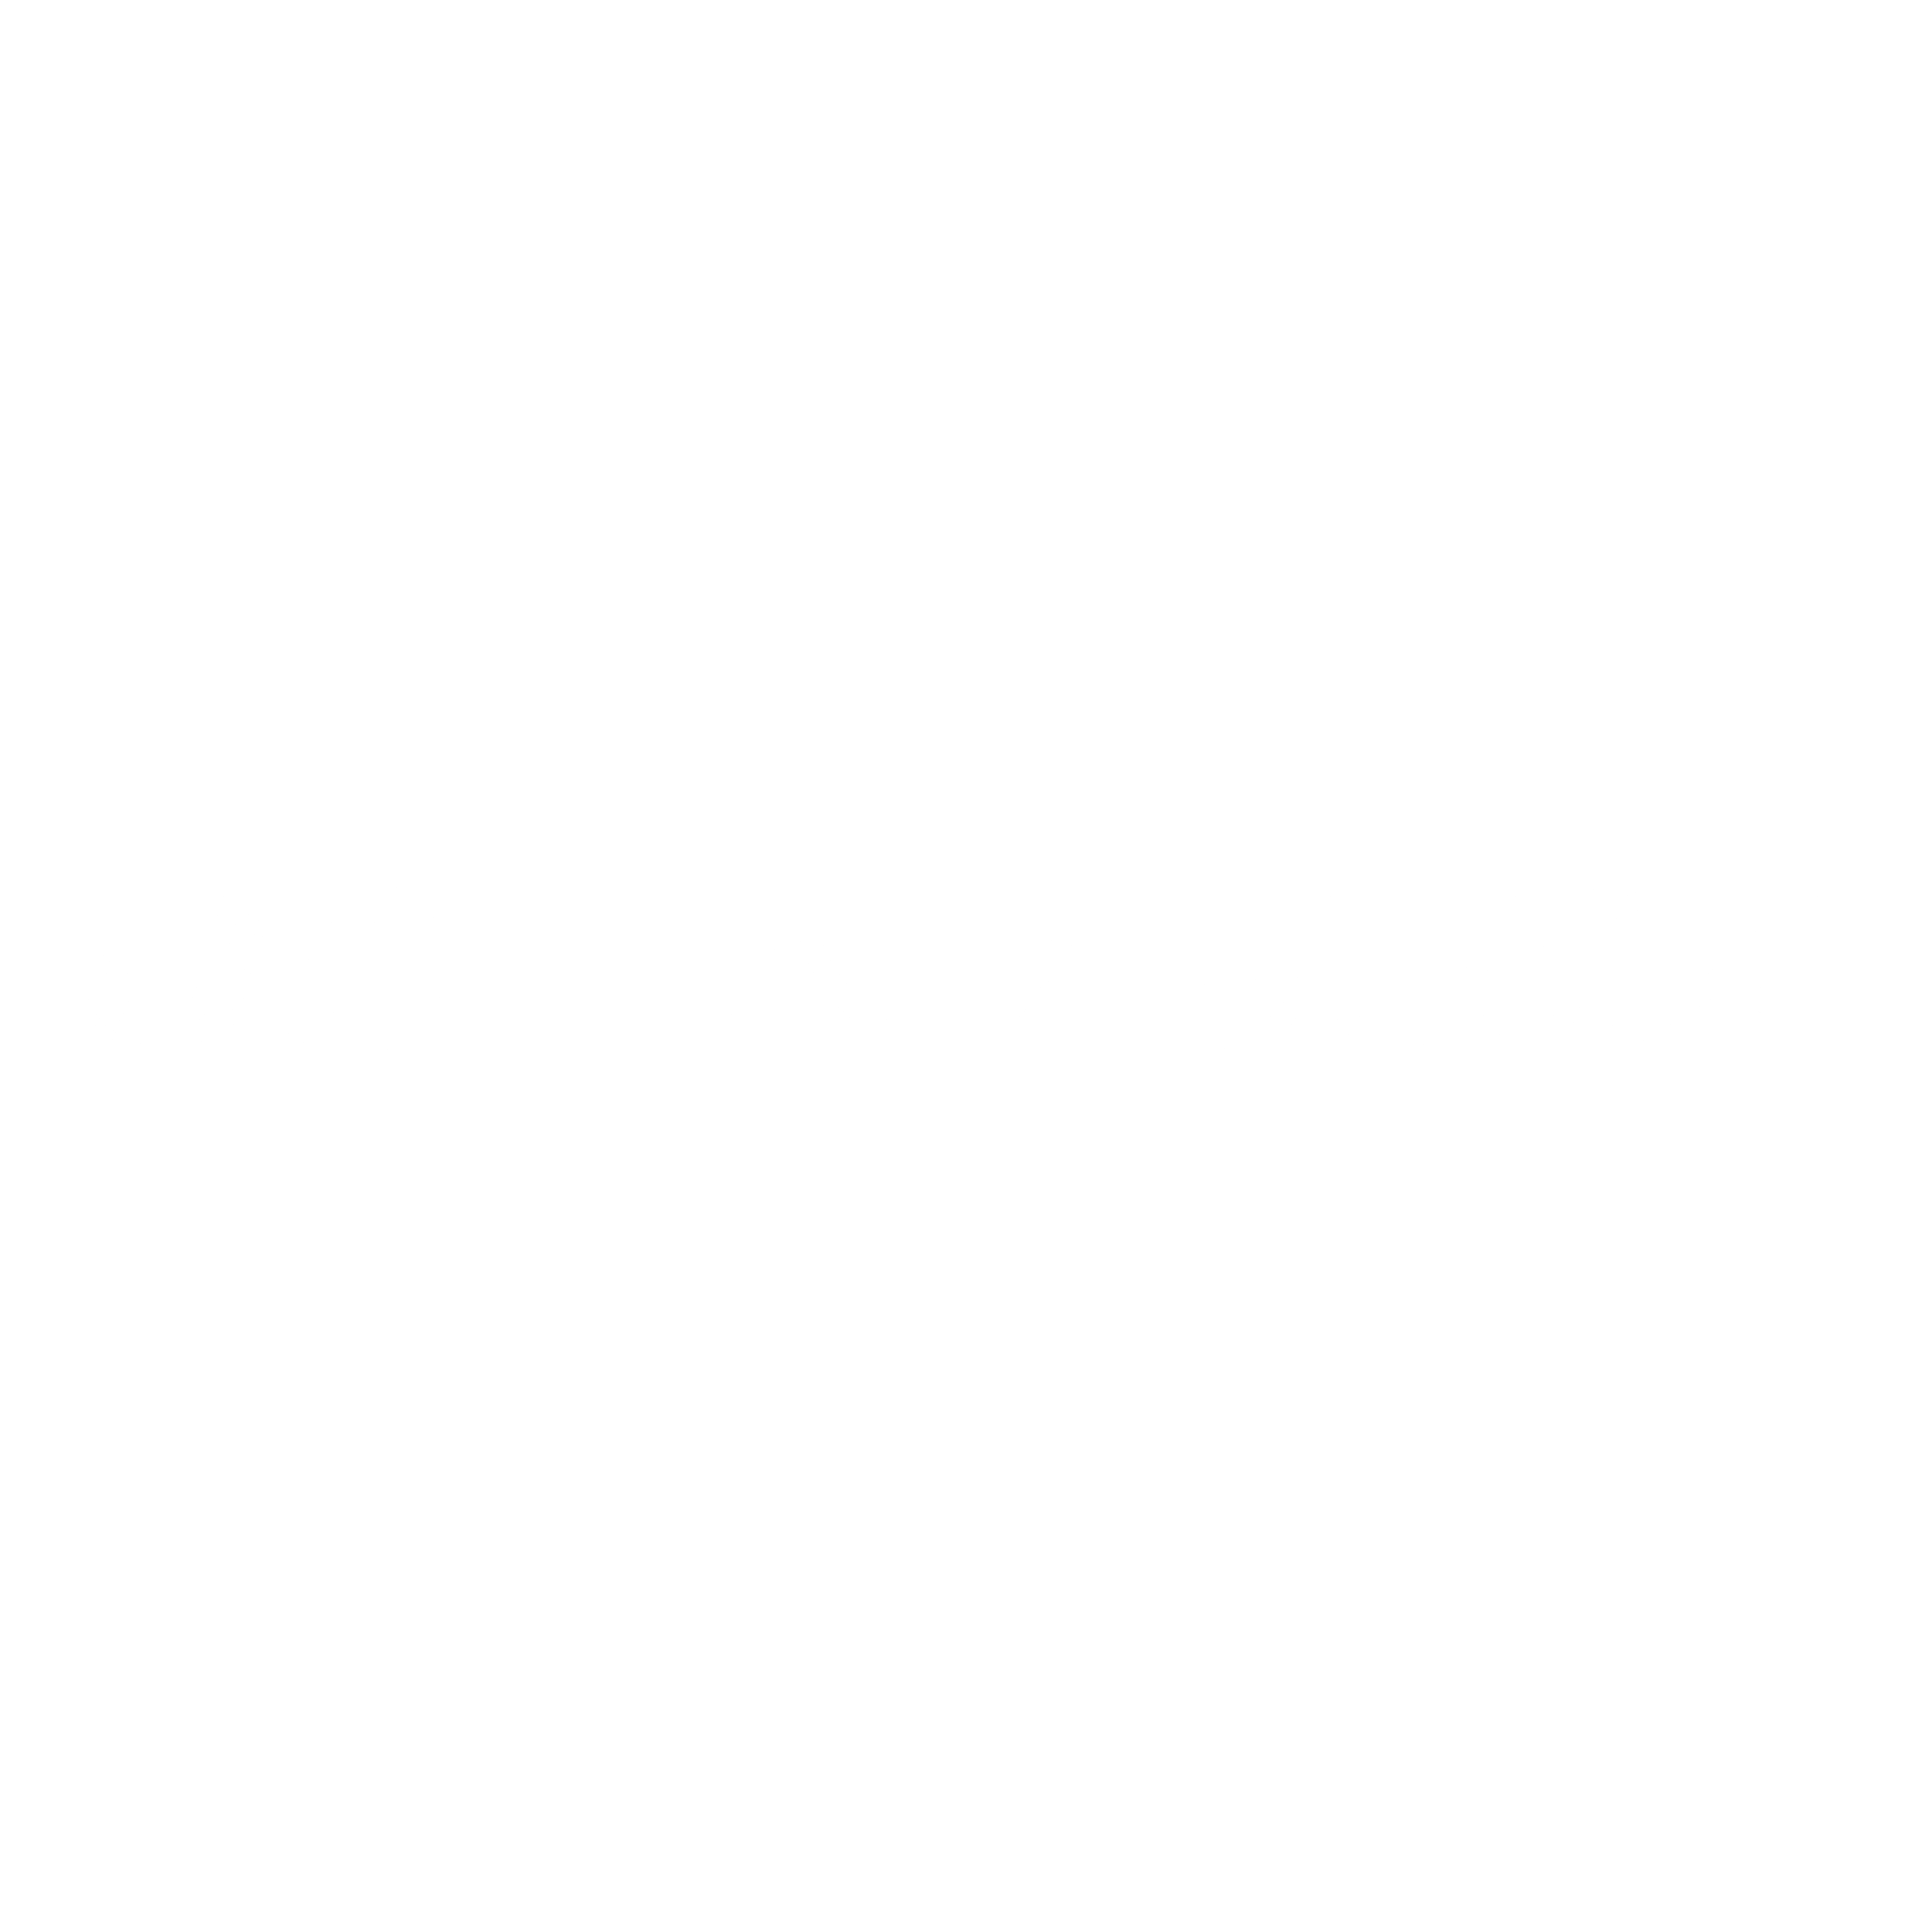 JCI Logo - JCI Logo PNG Transparent & SVG Vector